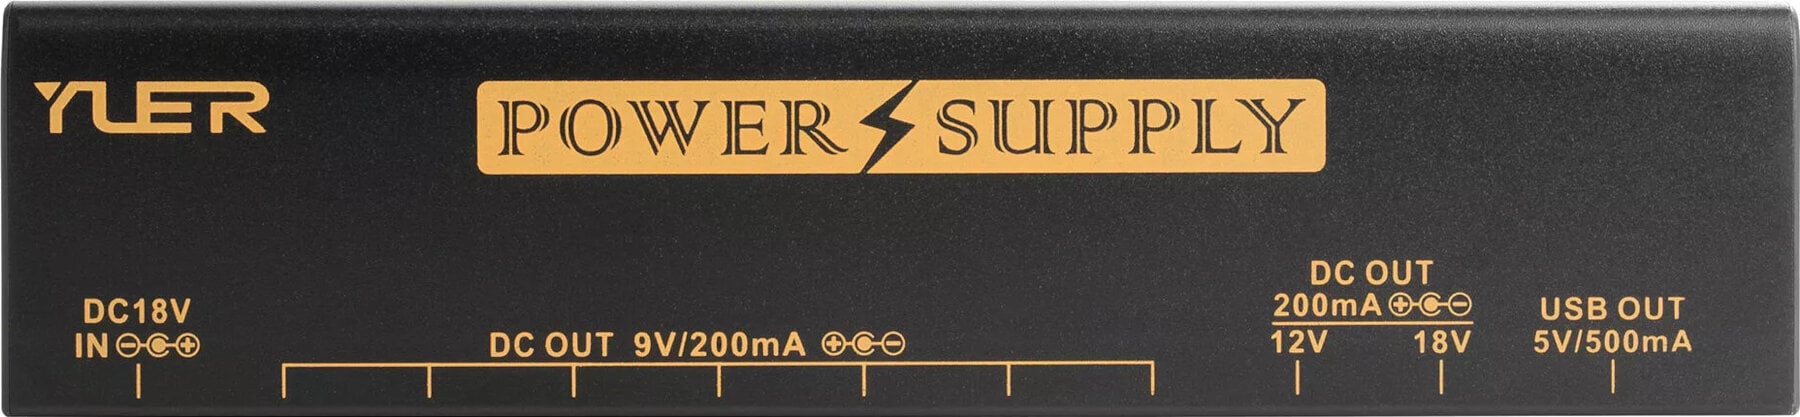 Power Supply Adapter Yuer PR-04